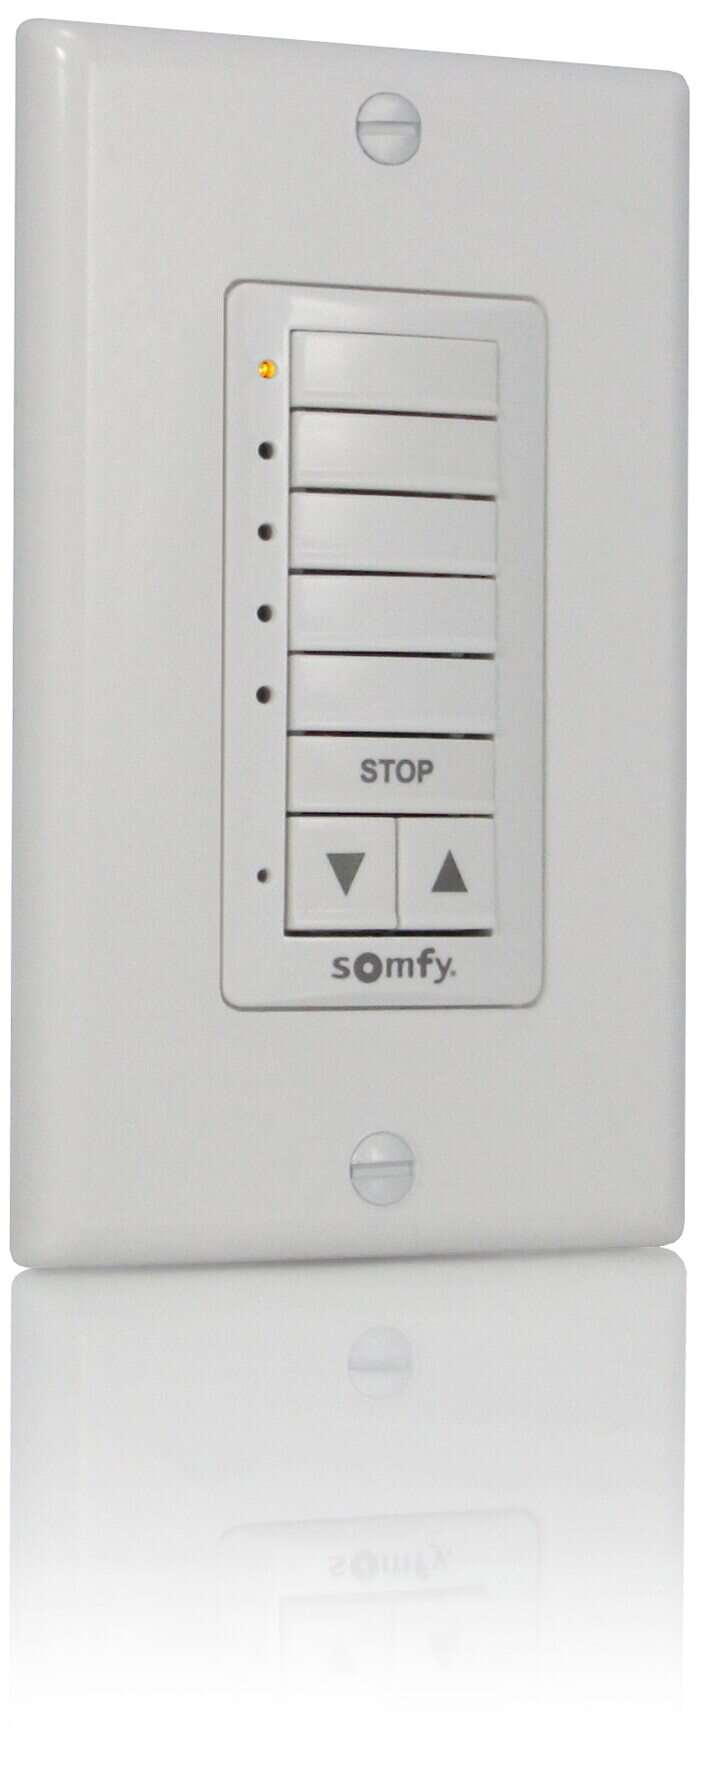 MPN # 1811074 Somfy Decoflex Sujetadores RTS Interruptor de pared; 4 canal; Blanco 